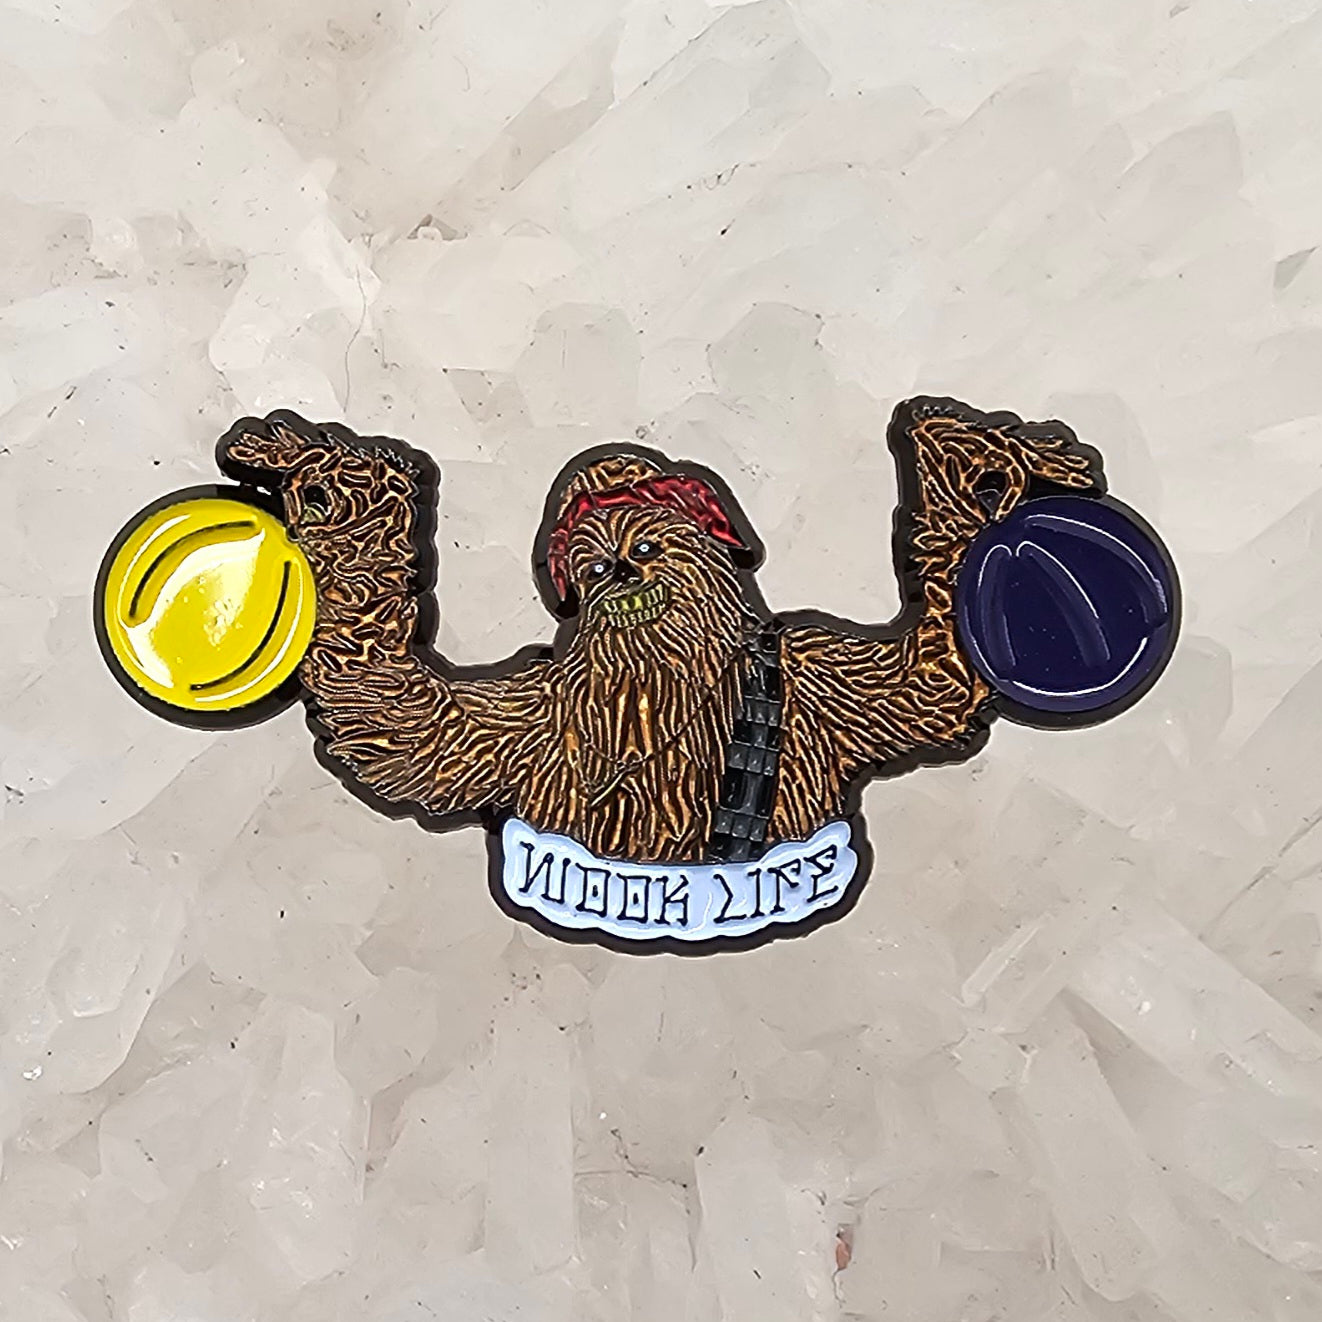 Wook Life Chewbacca Star Nitrous Whip It Wookie Wars Enamel Pins Hat Pins Lapel Pin Brooch Badge Festival Pin